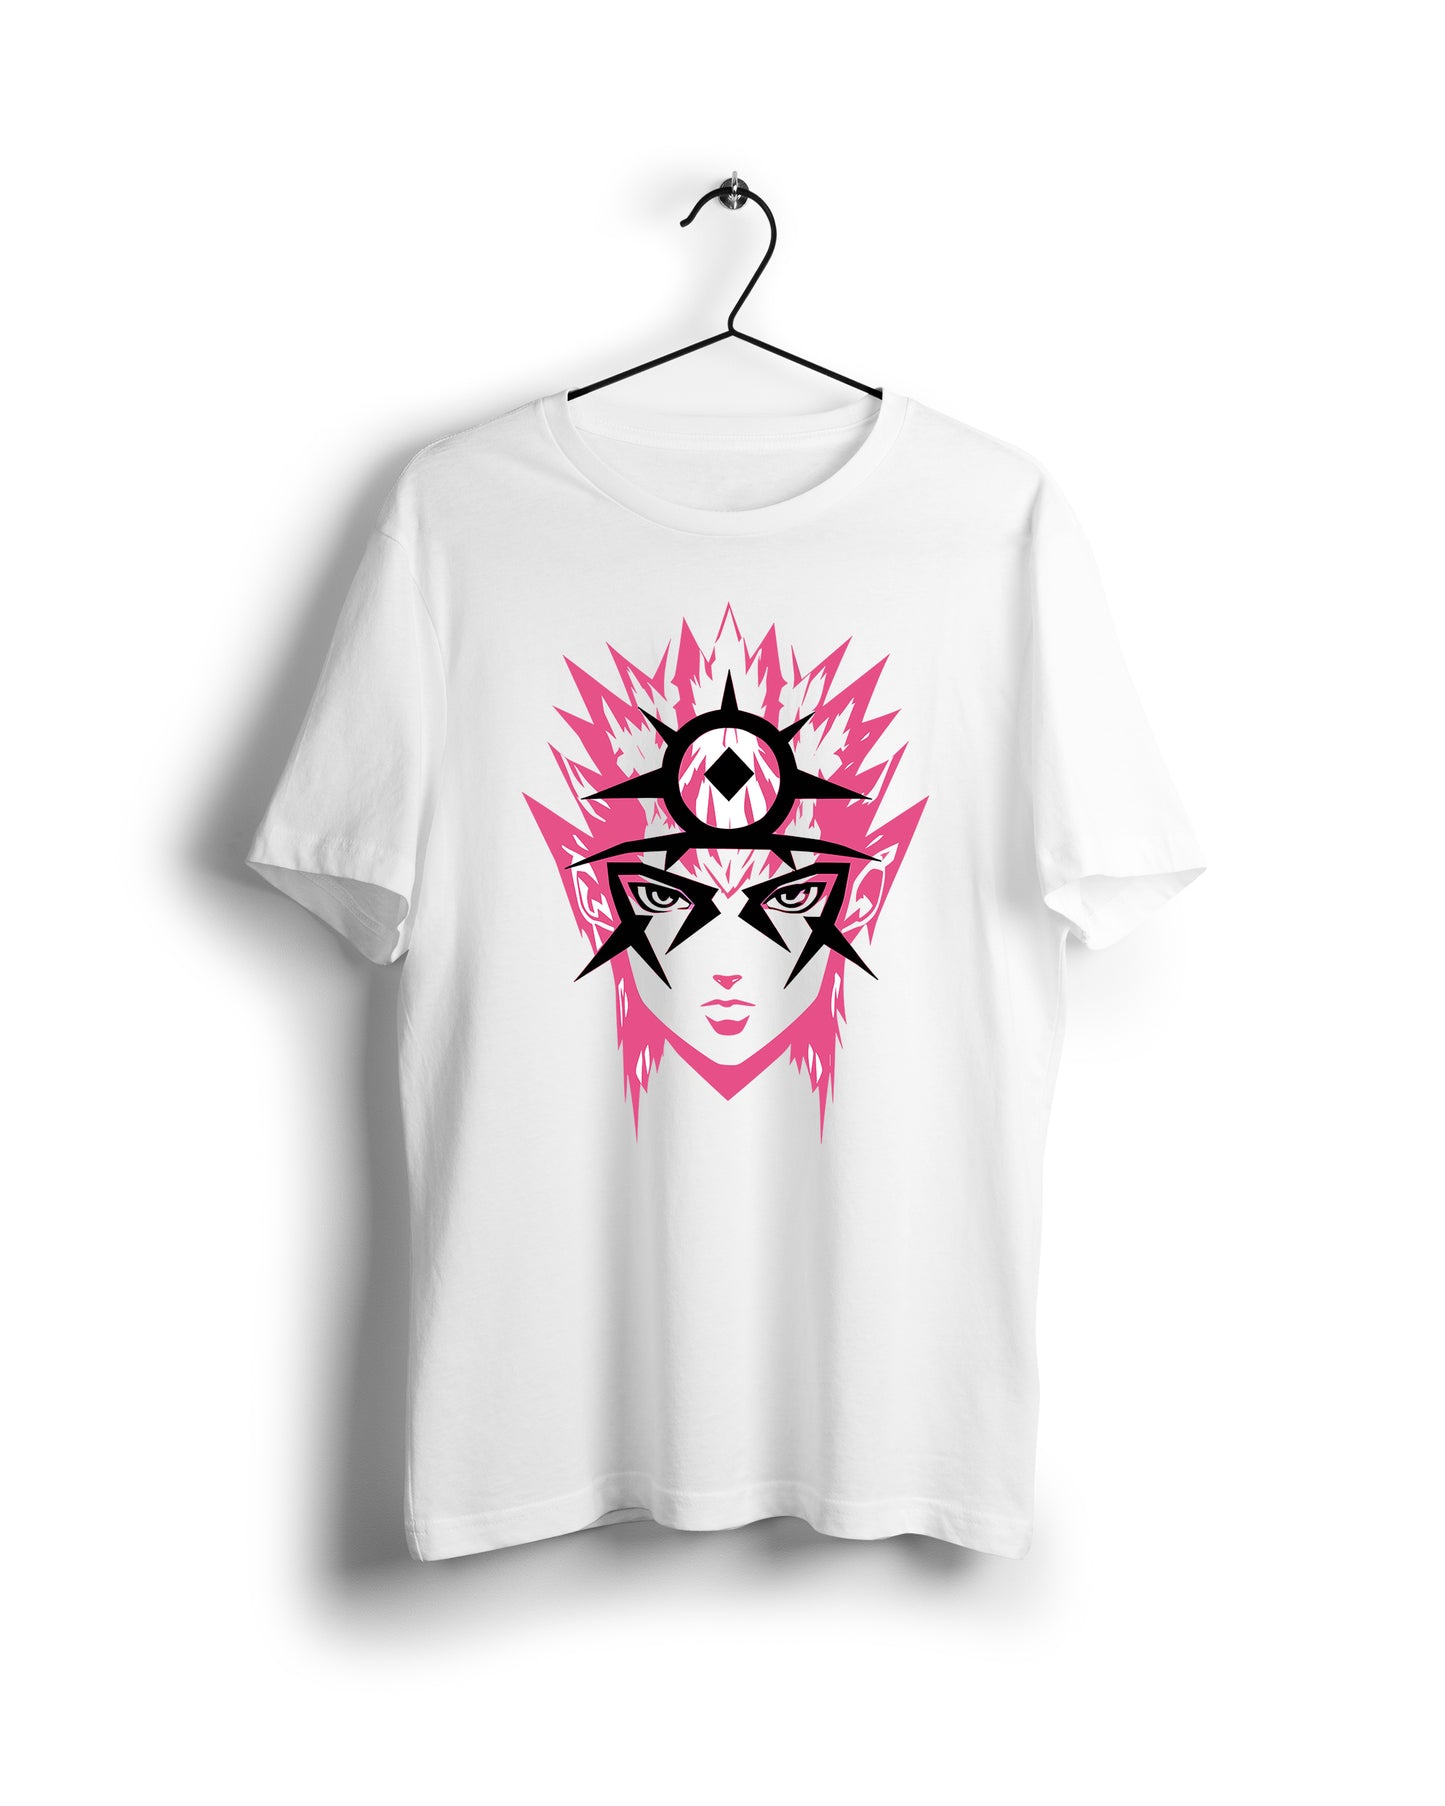 Minimalist Naruto Logo Tee: Pink & Black Elegance - Digital Graphics Basic T-shirt White